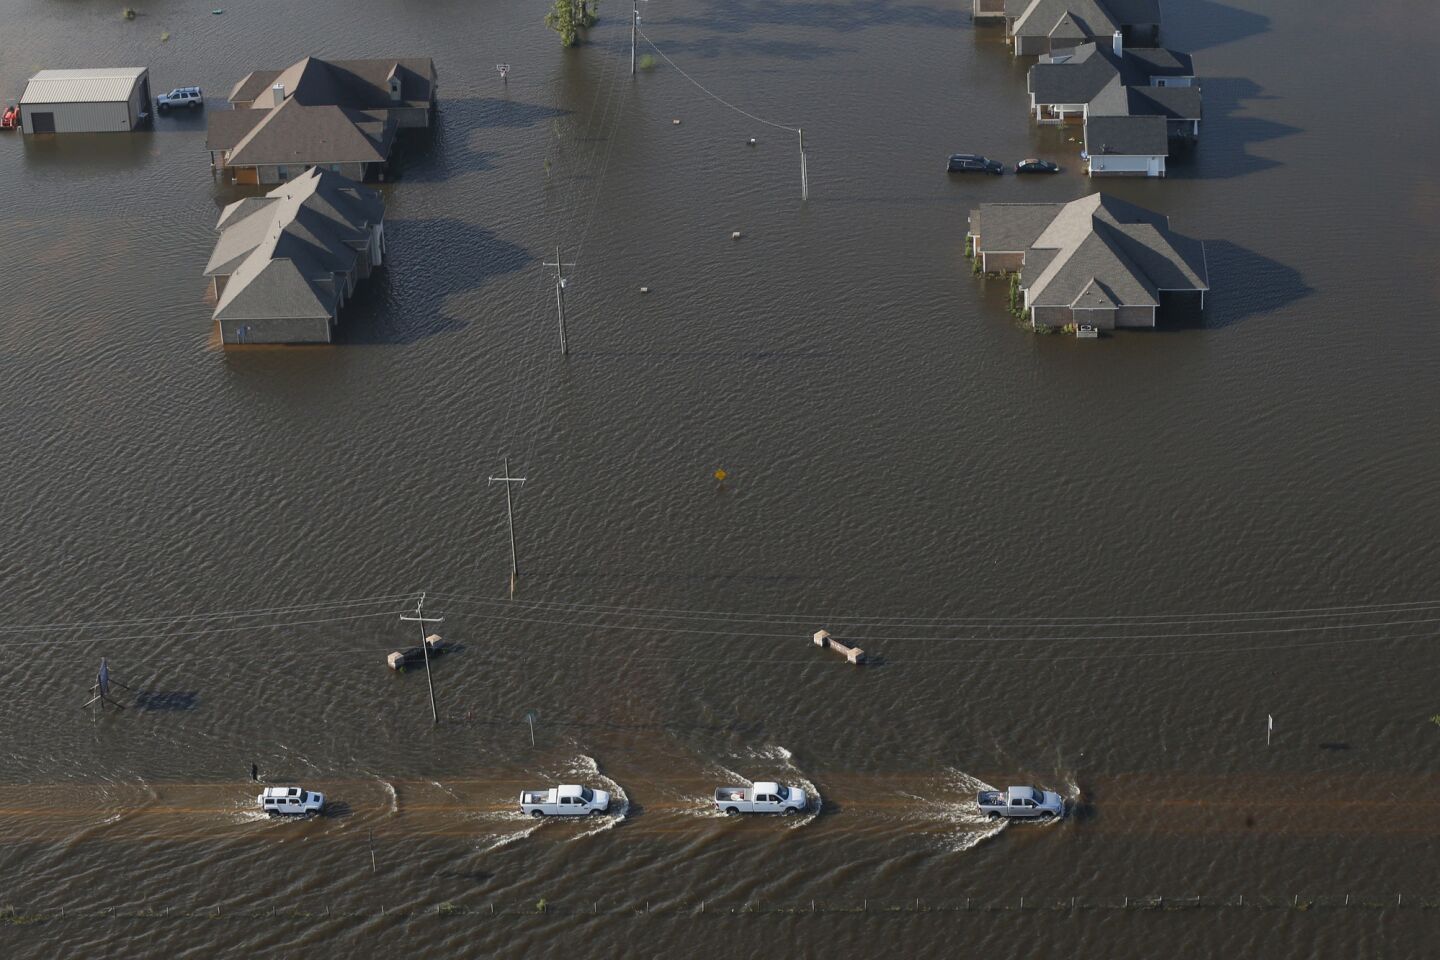 Texas flooding